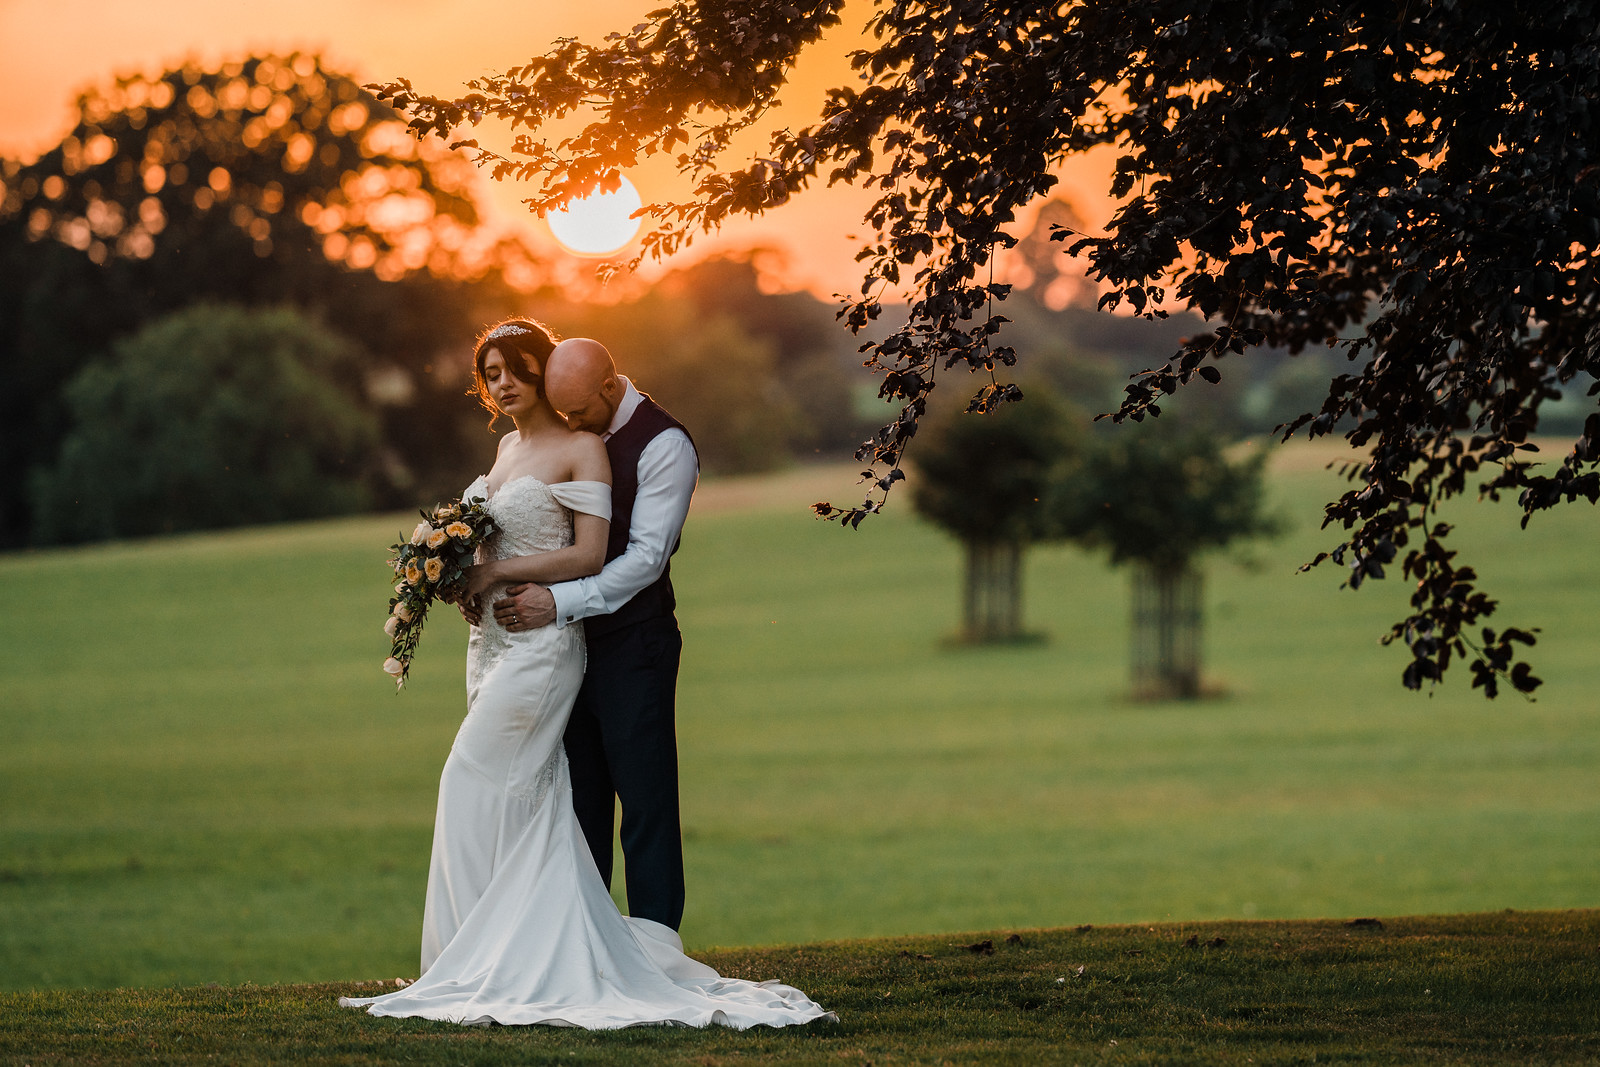 Bride and groom sunset wedding photo